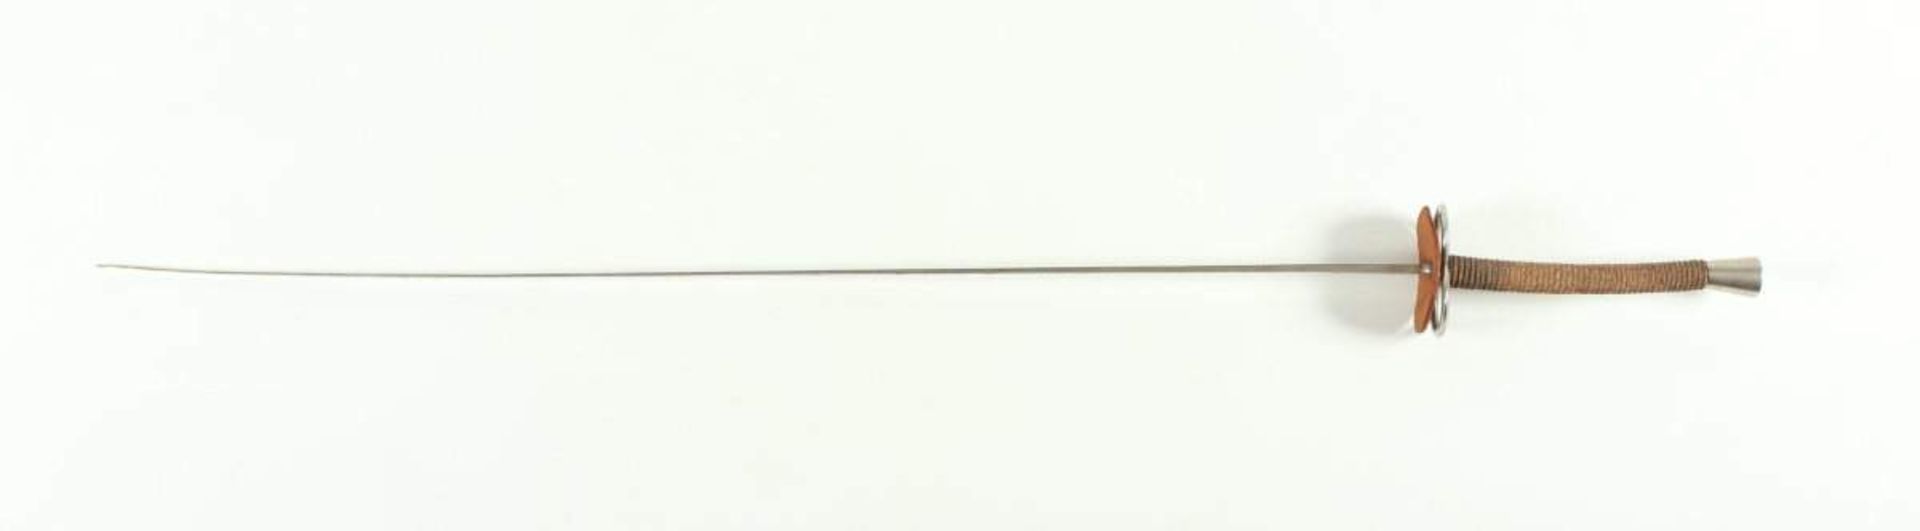 FLORETT, vernickelte Klinge (Hersteller Clemen und Jung, Solingen), L 103